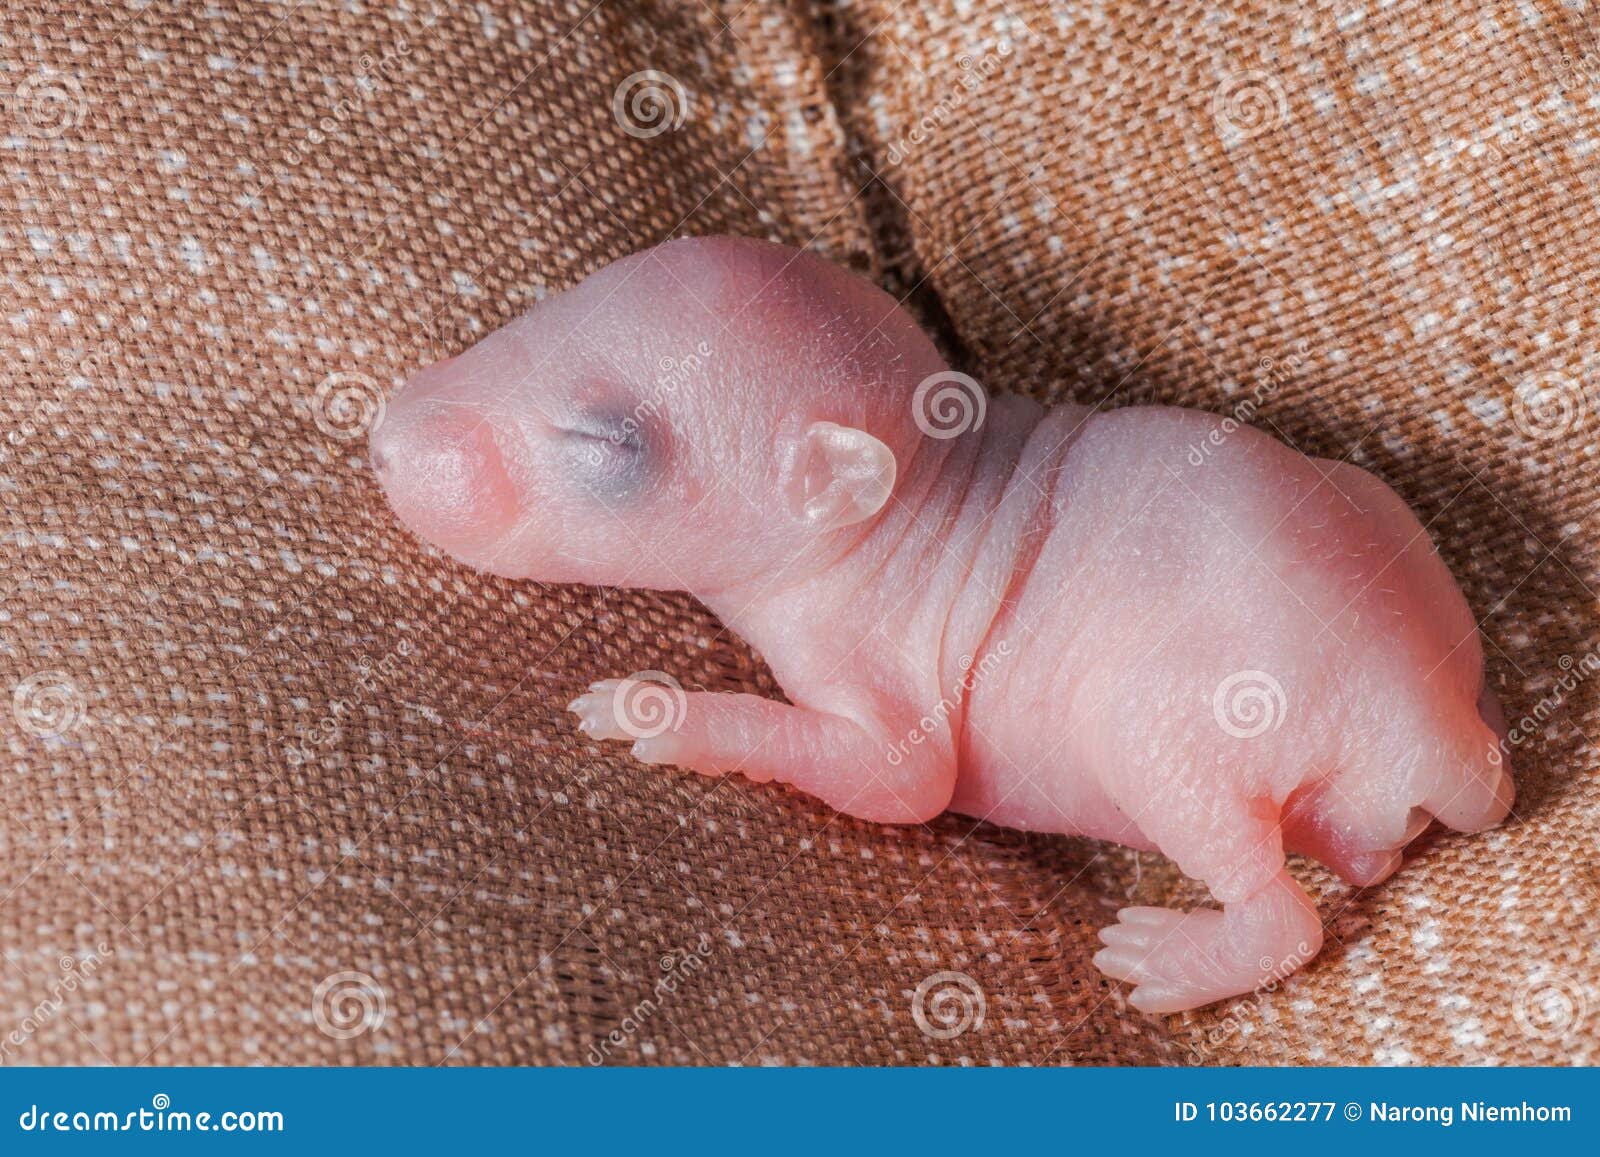 Baby rats sleep on the bed stock image. Image of animal - 103662277